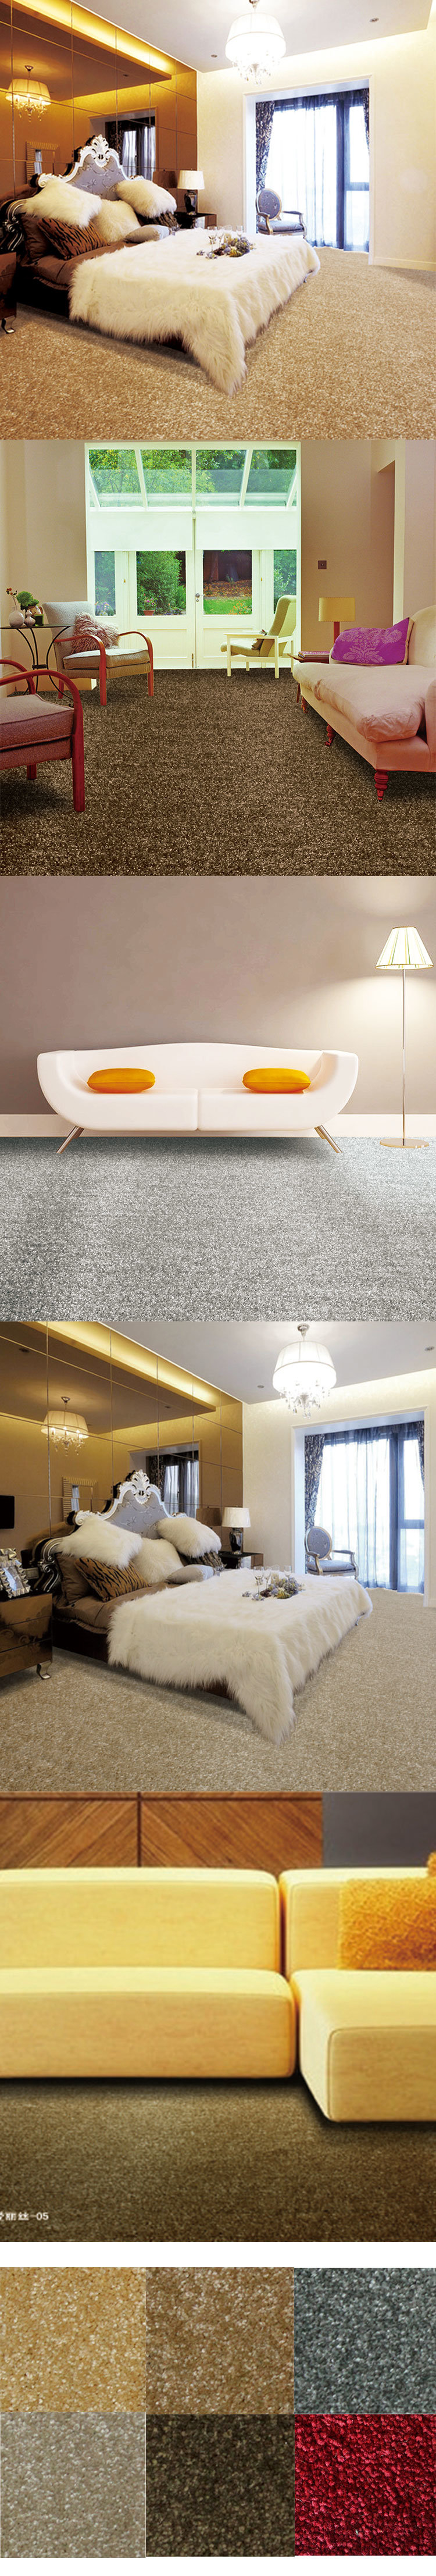 12mm Plain Carpet Alice Commercial Office Carpet Luxury Broadloom Carpet Living Room Carpet Residential Wall to Wall Carpet Loop Pile Cut Pile Carpet